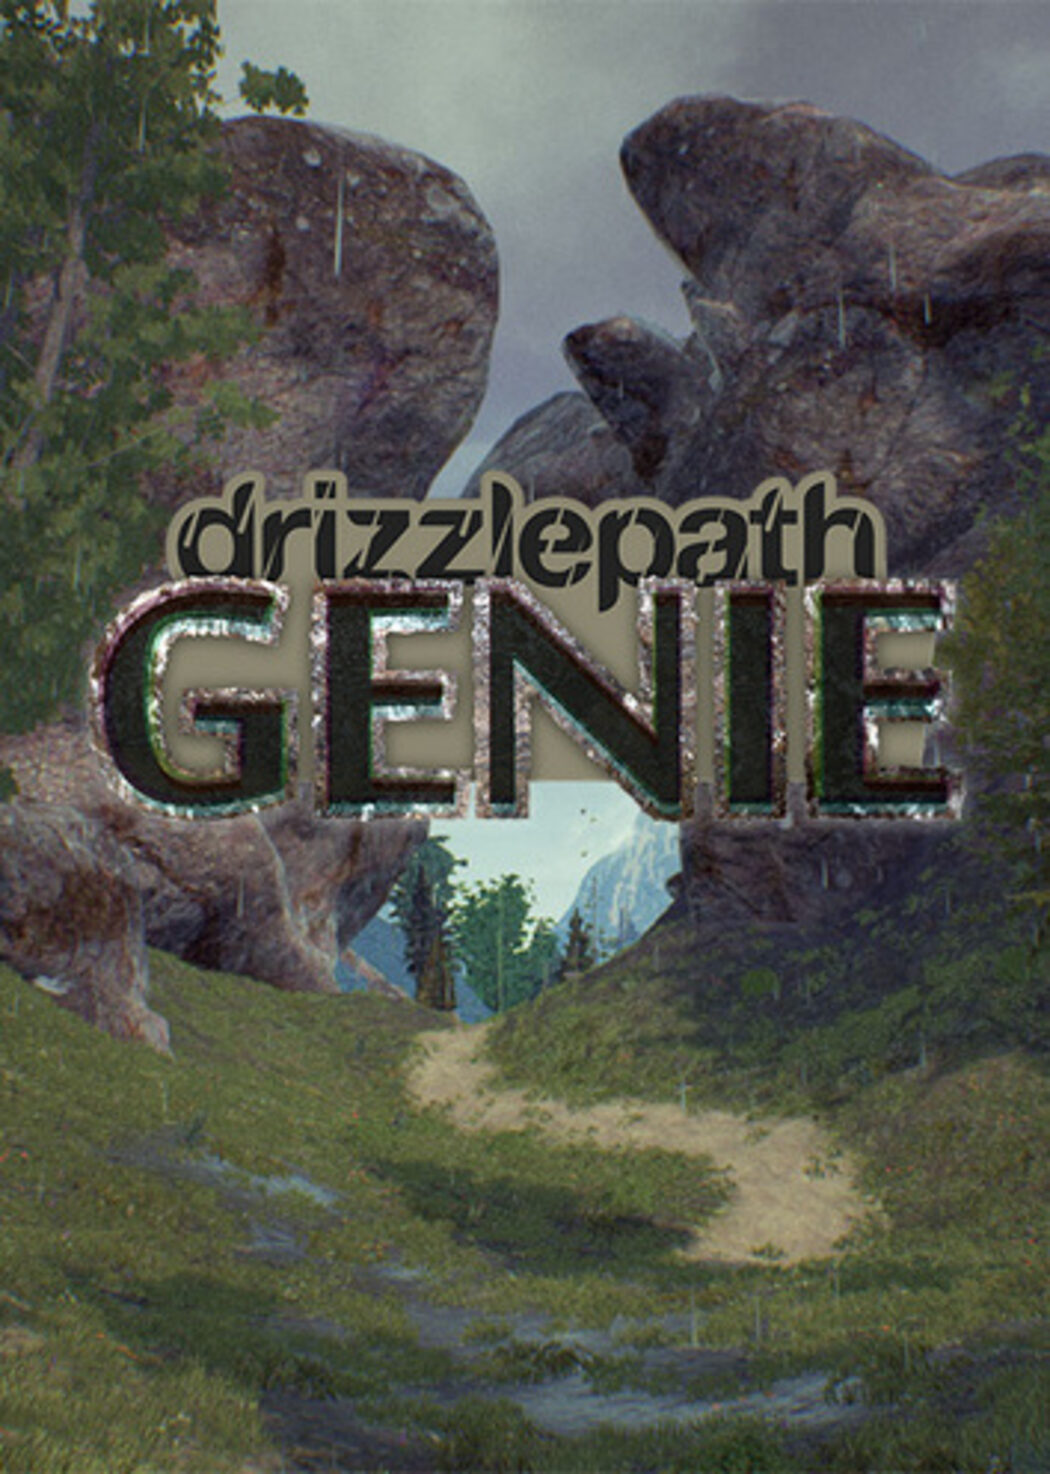 Drizzlepath: Genie on Steam